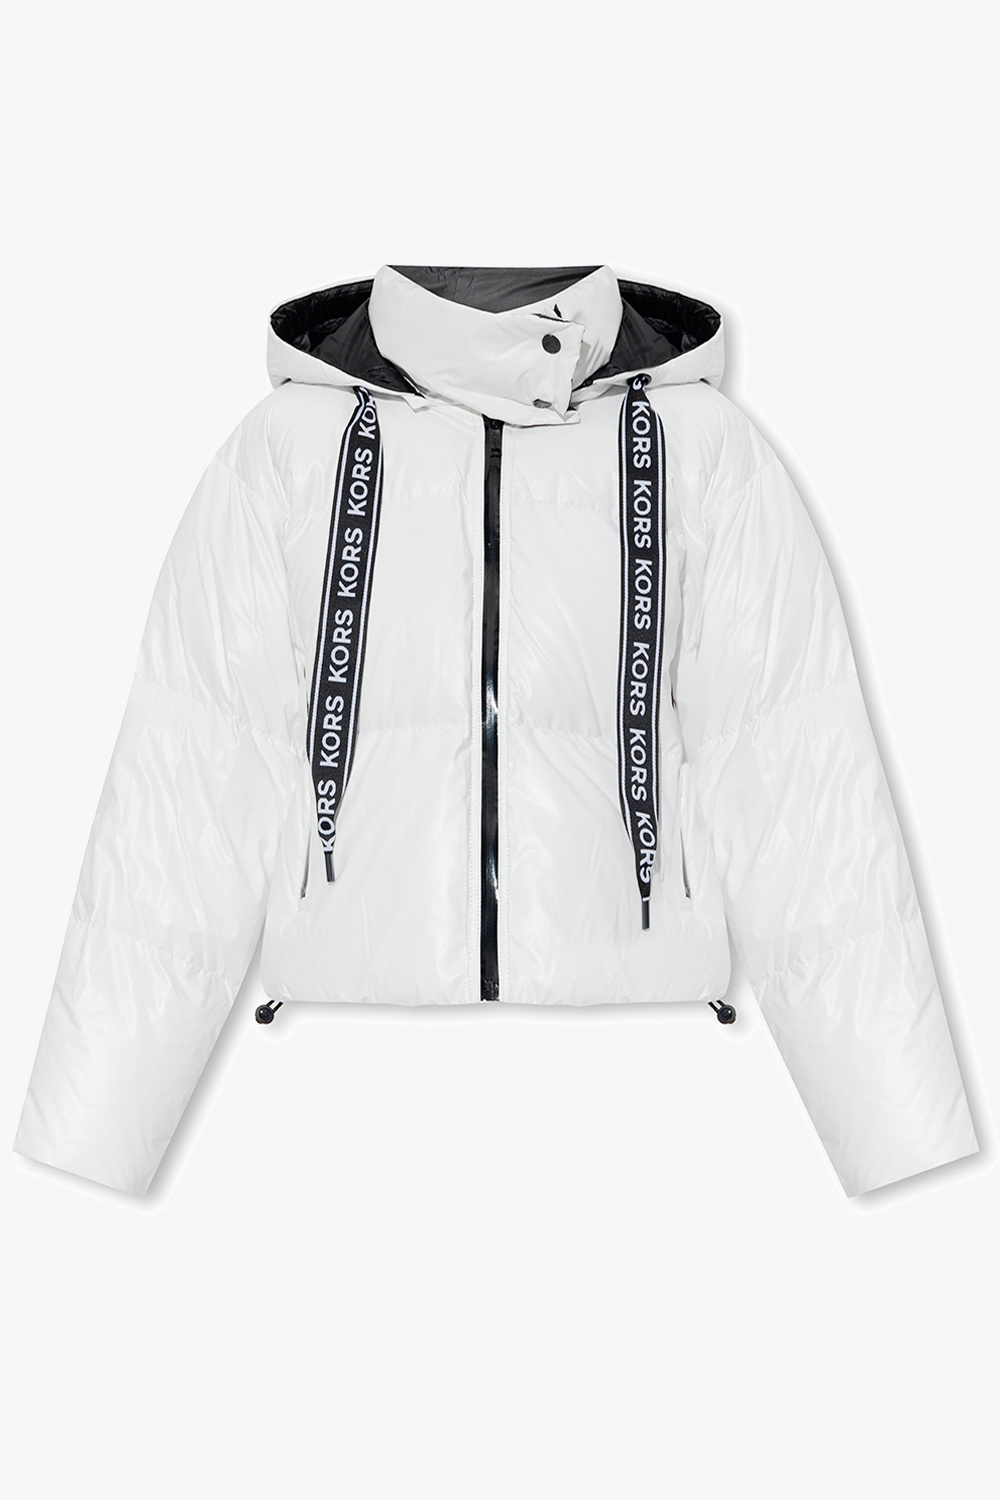 De-iceShops TW - Mt143u T-shirt Marni - monogram Michael Michael Kors -  White River Island Marinblå sweatshirt med couture